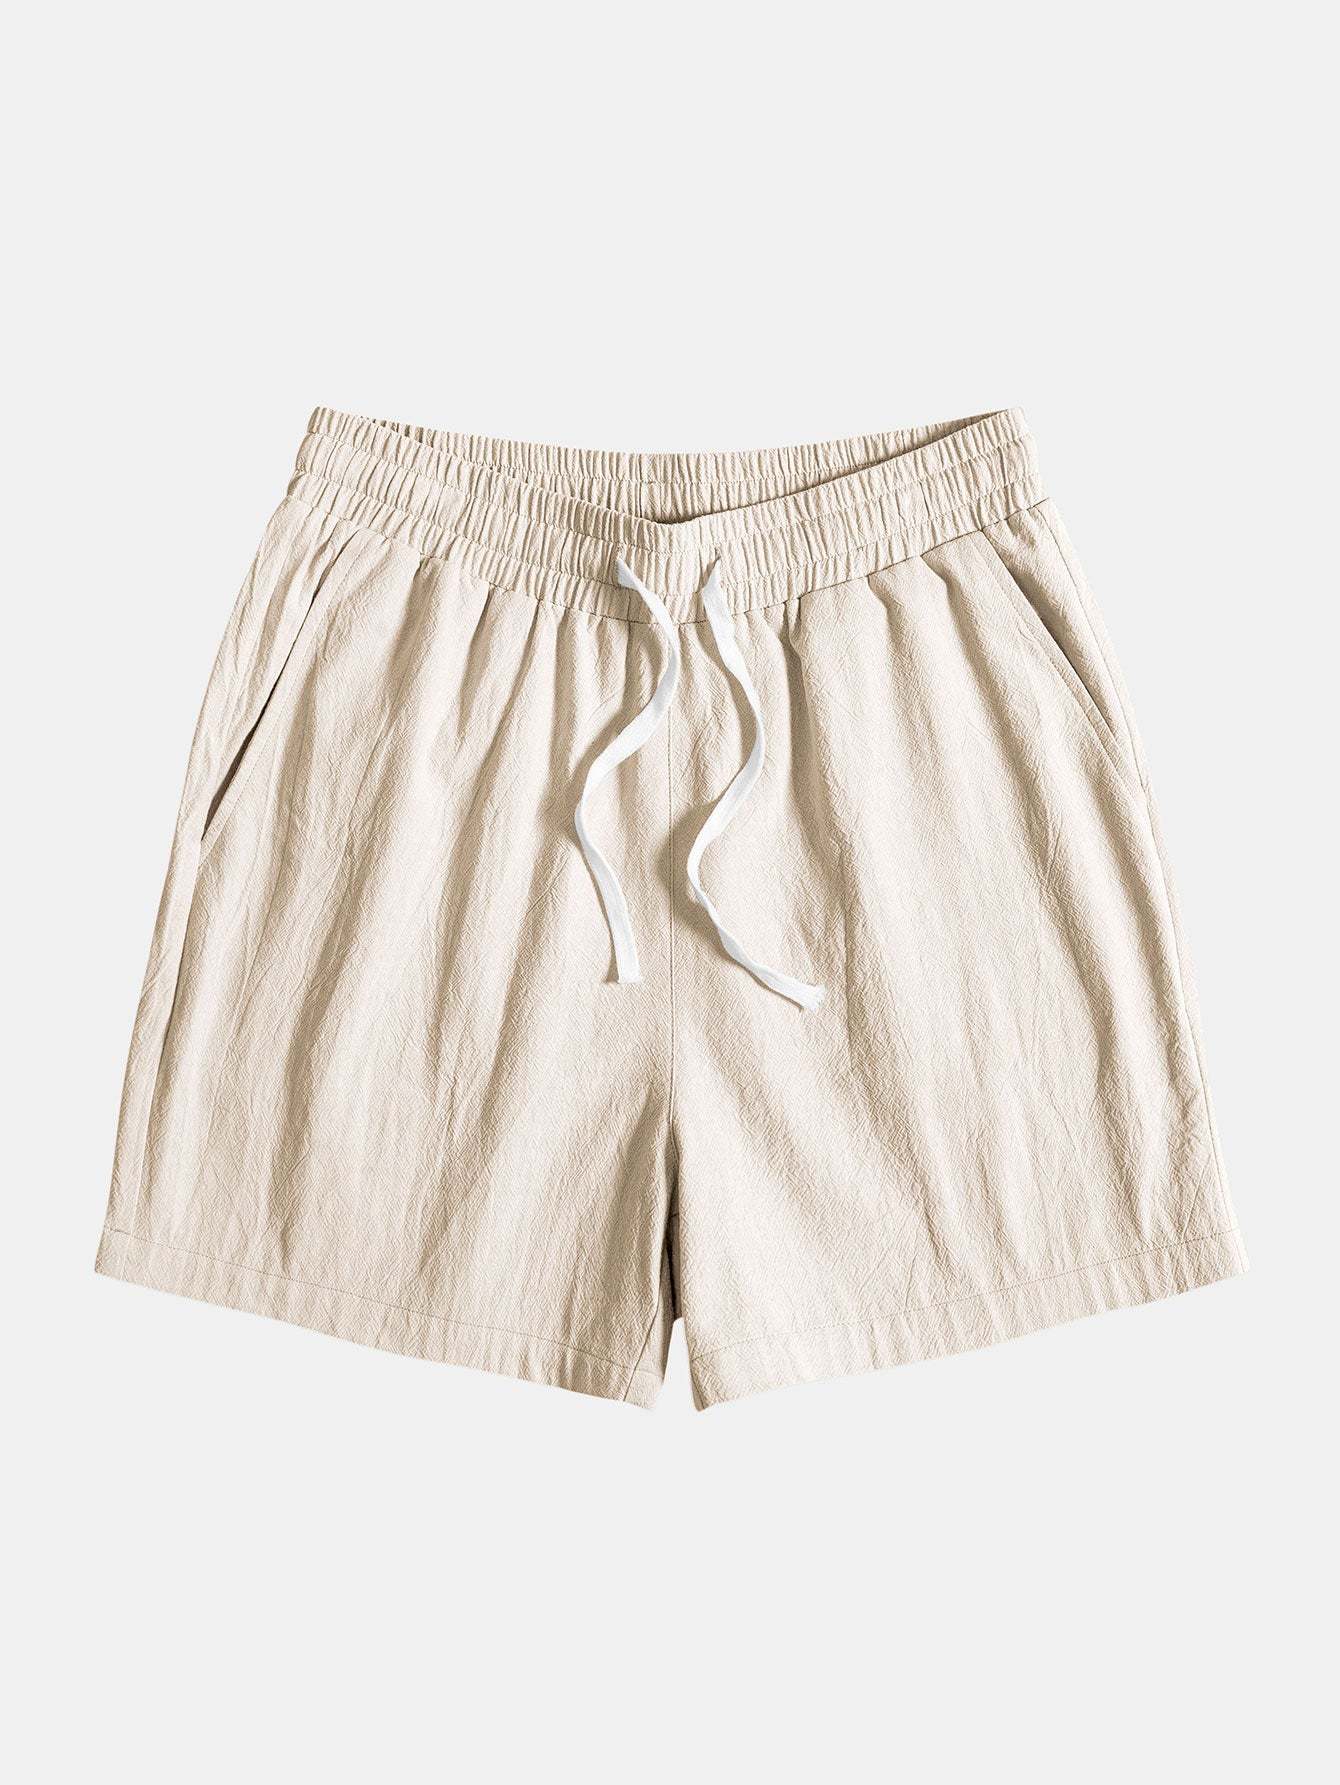 Textured Cotton Revere Shirt & 5" Shorts